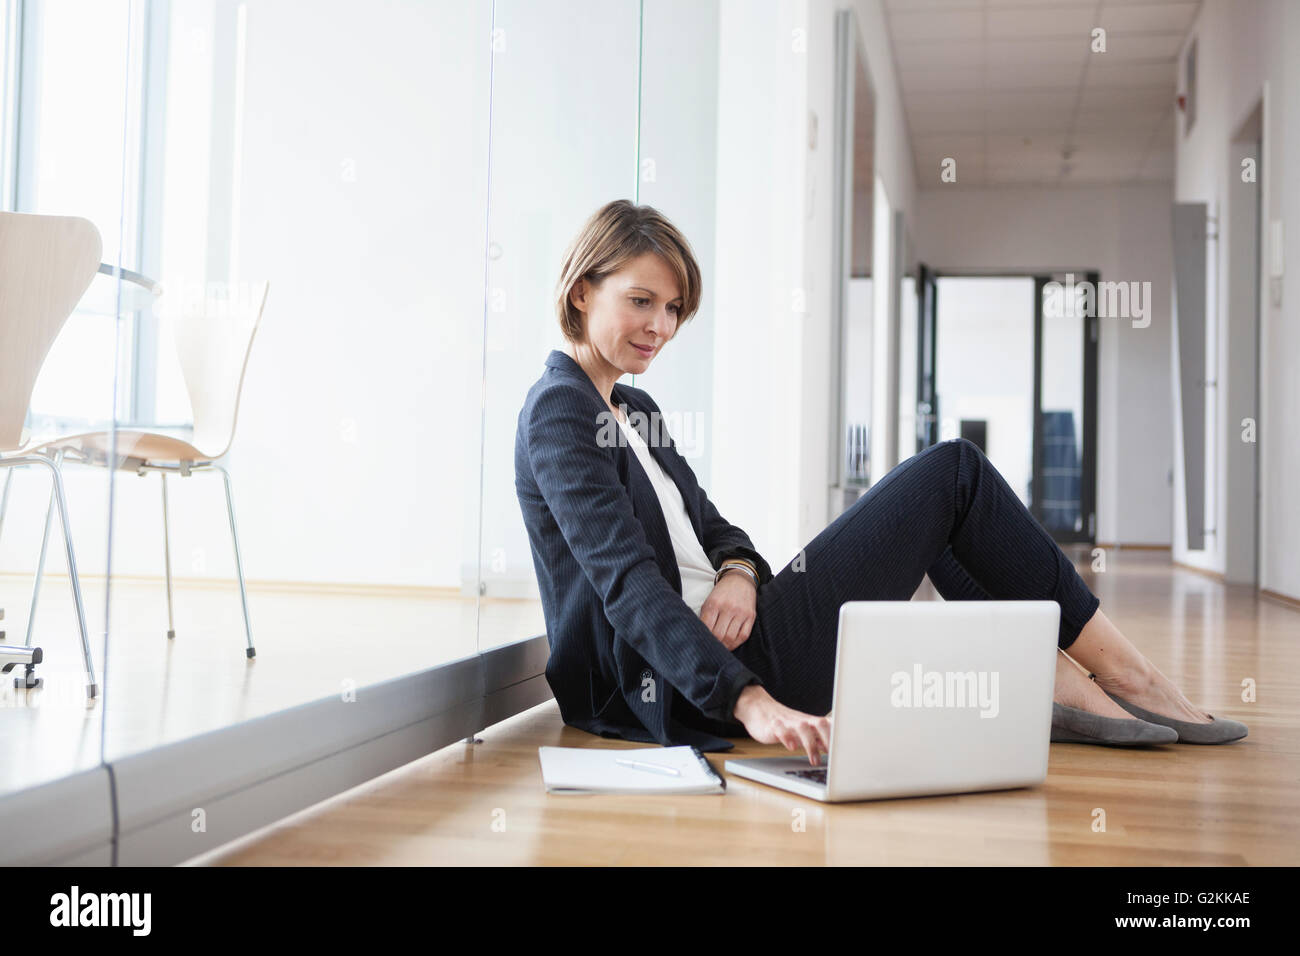 Businesswoman sitting on office floor using laptop Stock Photo